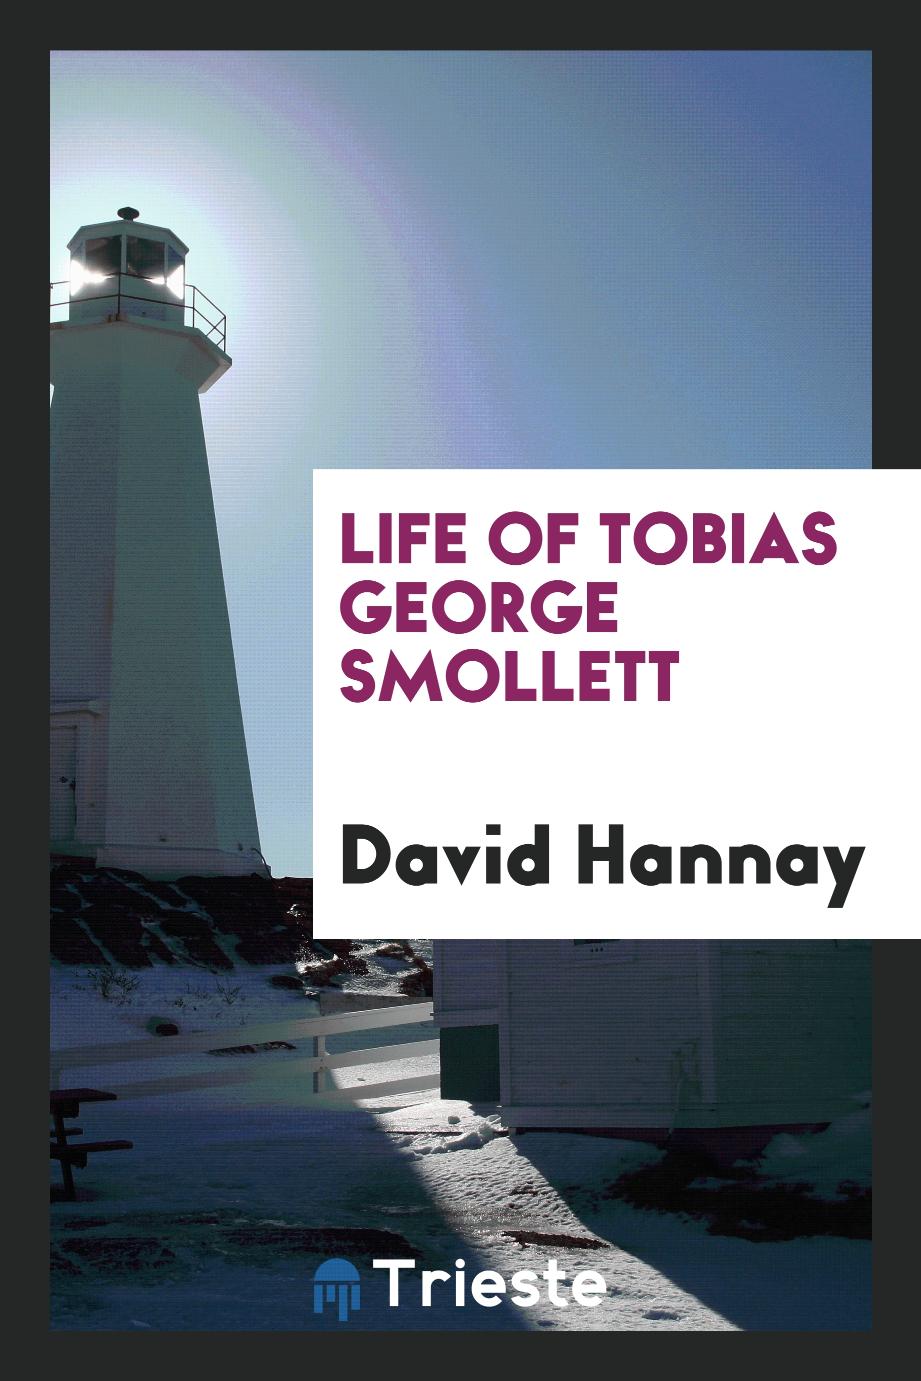 Life of Tobias George Smollett